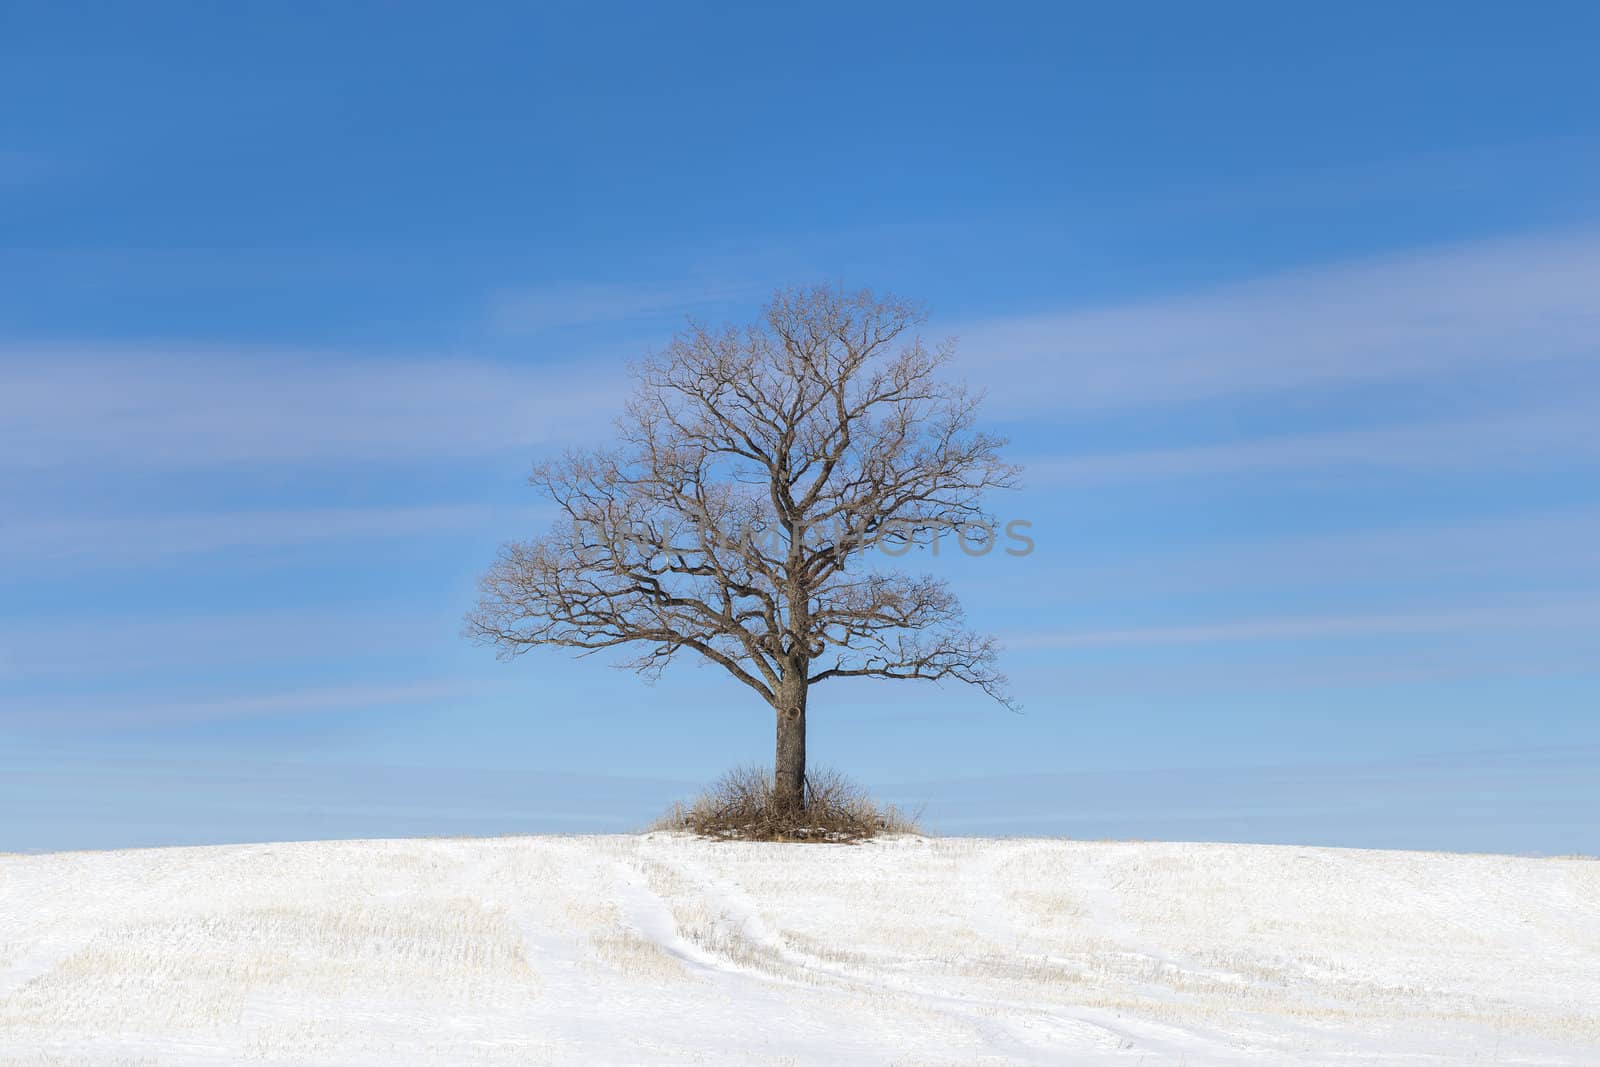 Old tree on snowy field on a blue sky bakground by A.L.